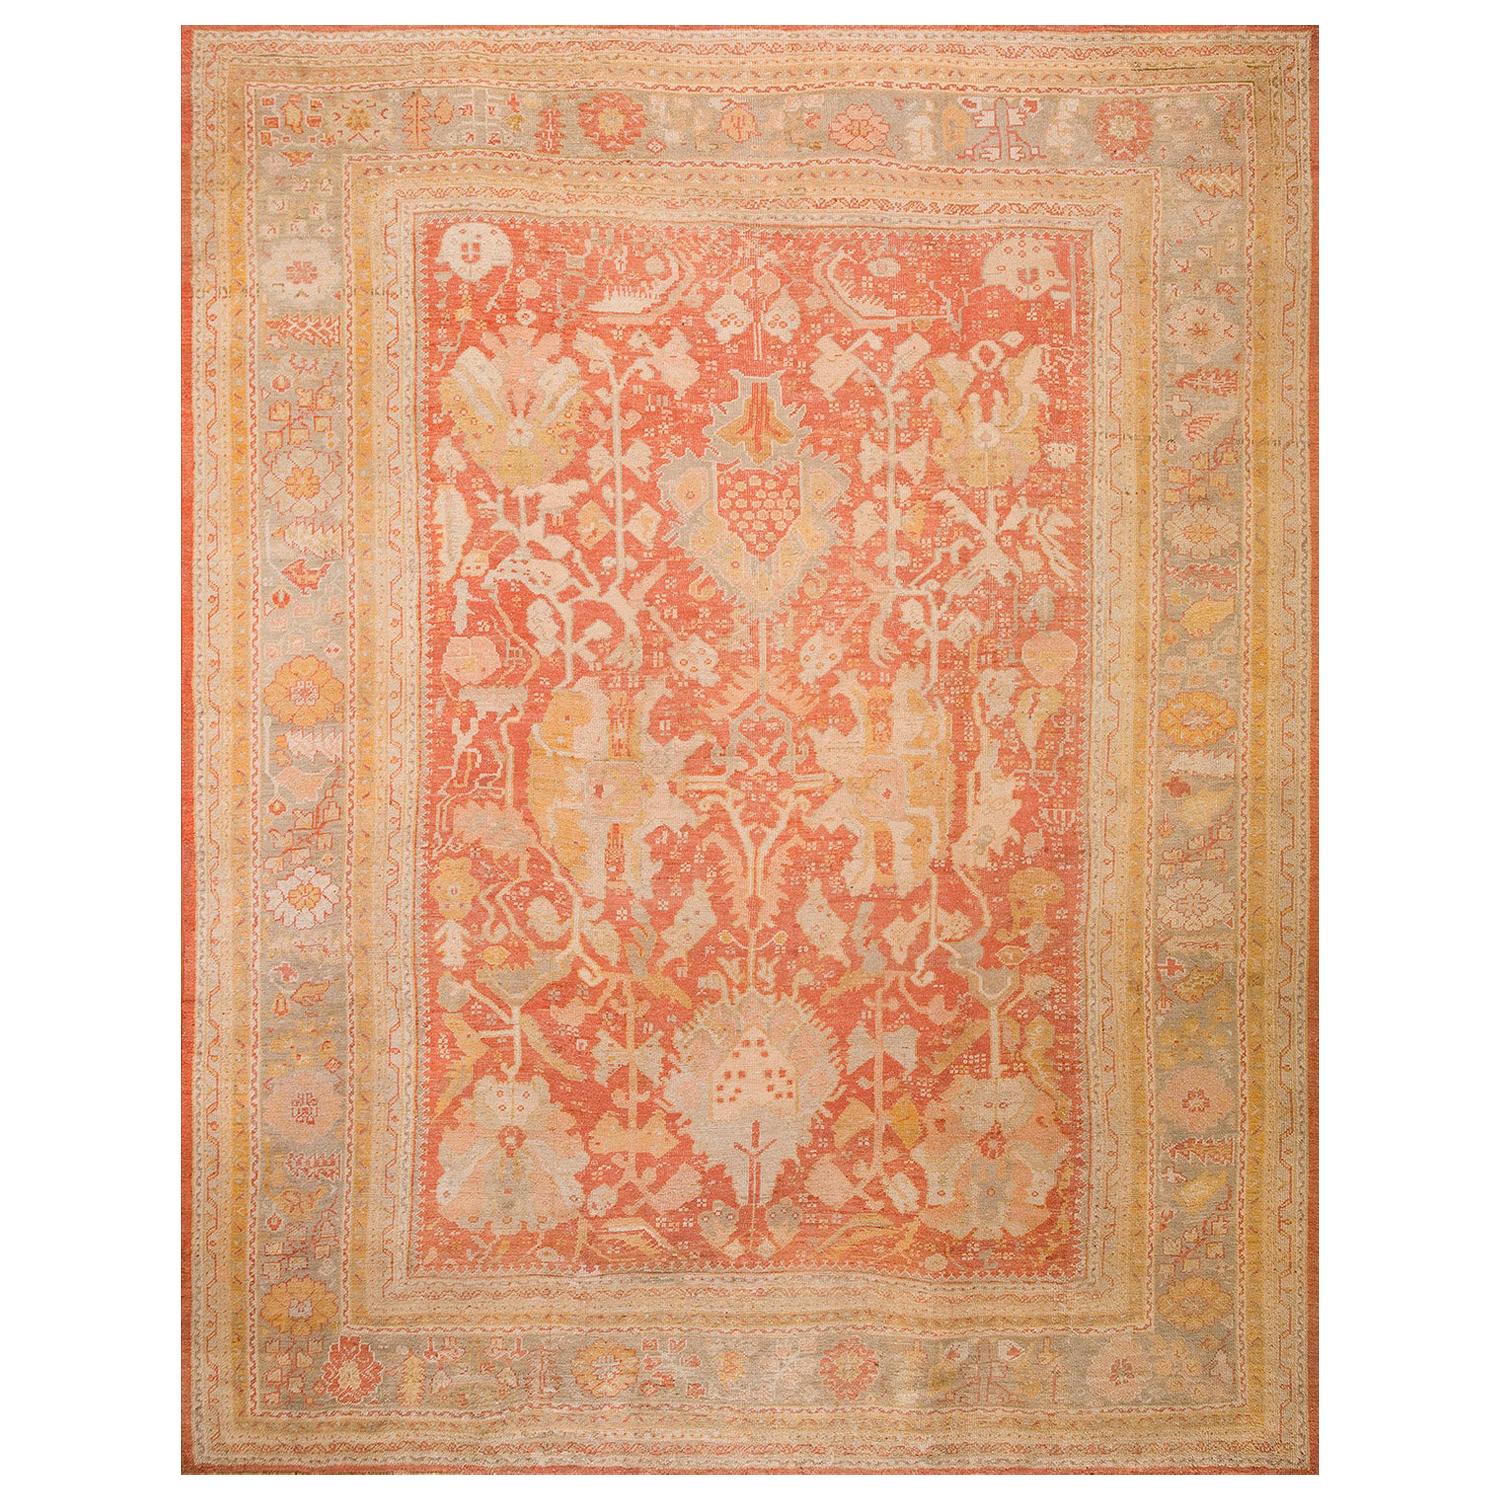 19th Century Turkish Oushak Carpet ( 12' x 15'6" - 365 x 472 ) For Sale